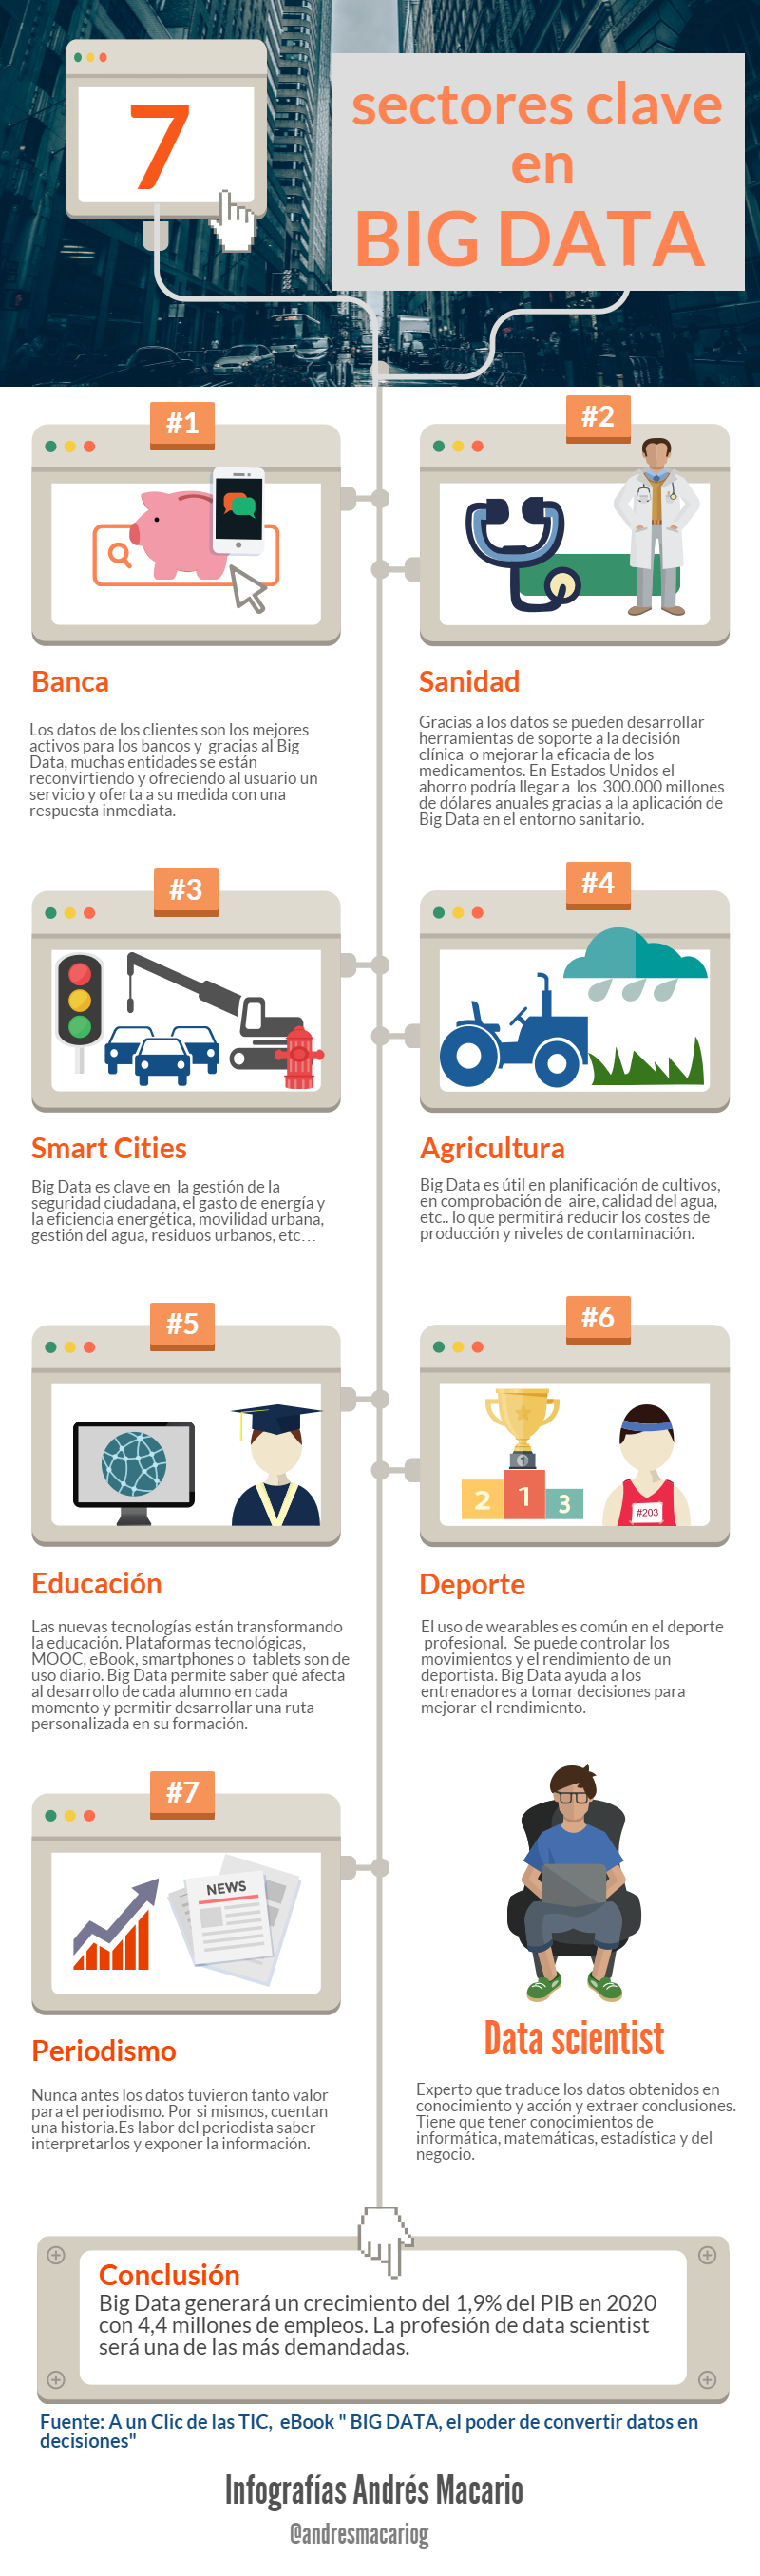 7 sectores clave en Big Data- Infografia Andres Macario